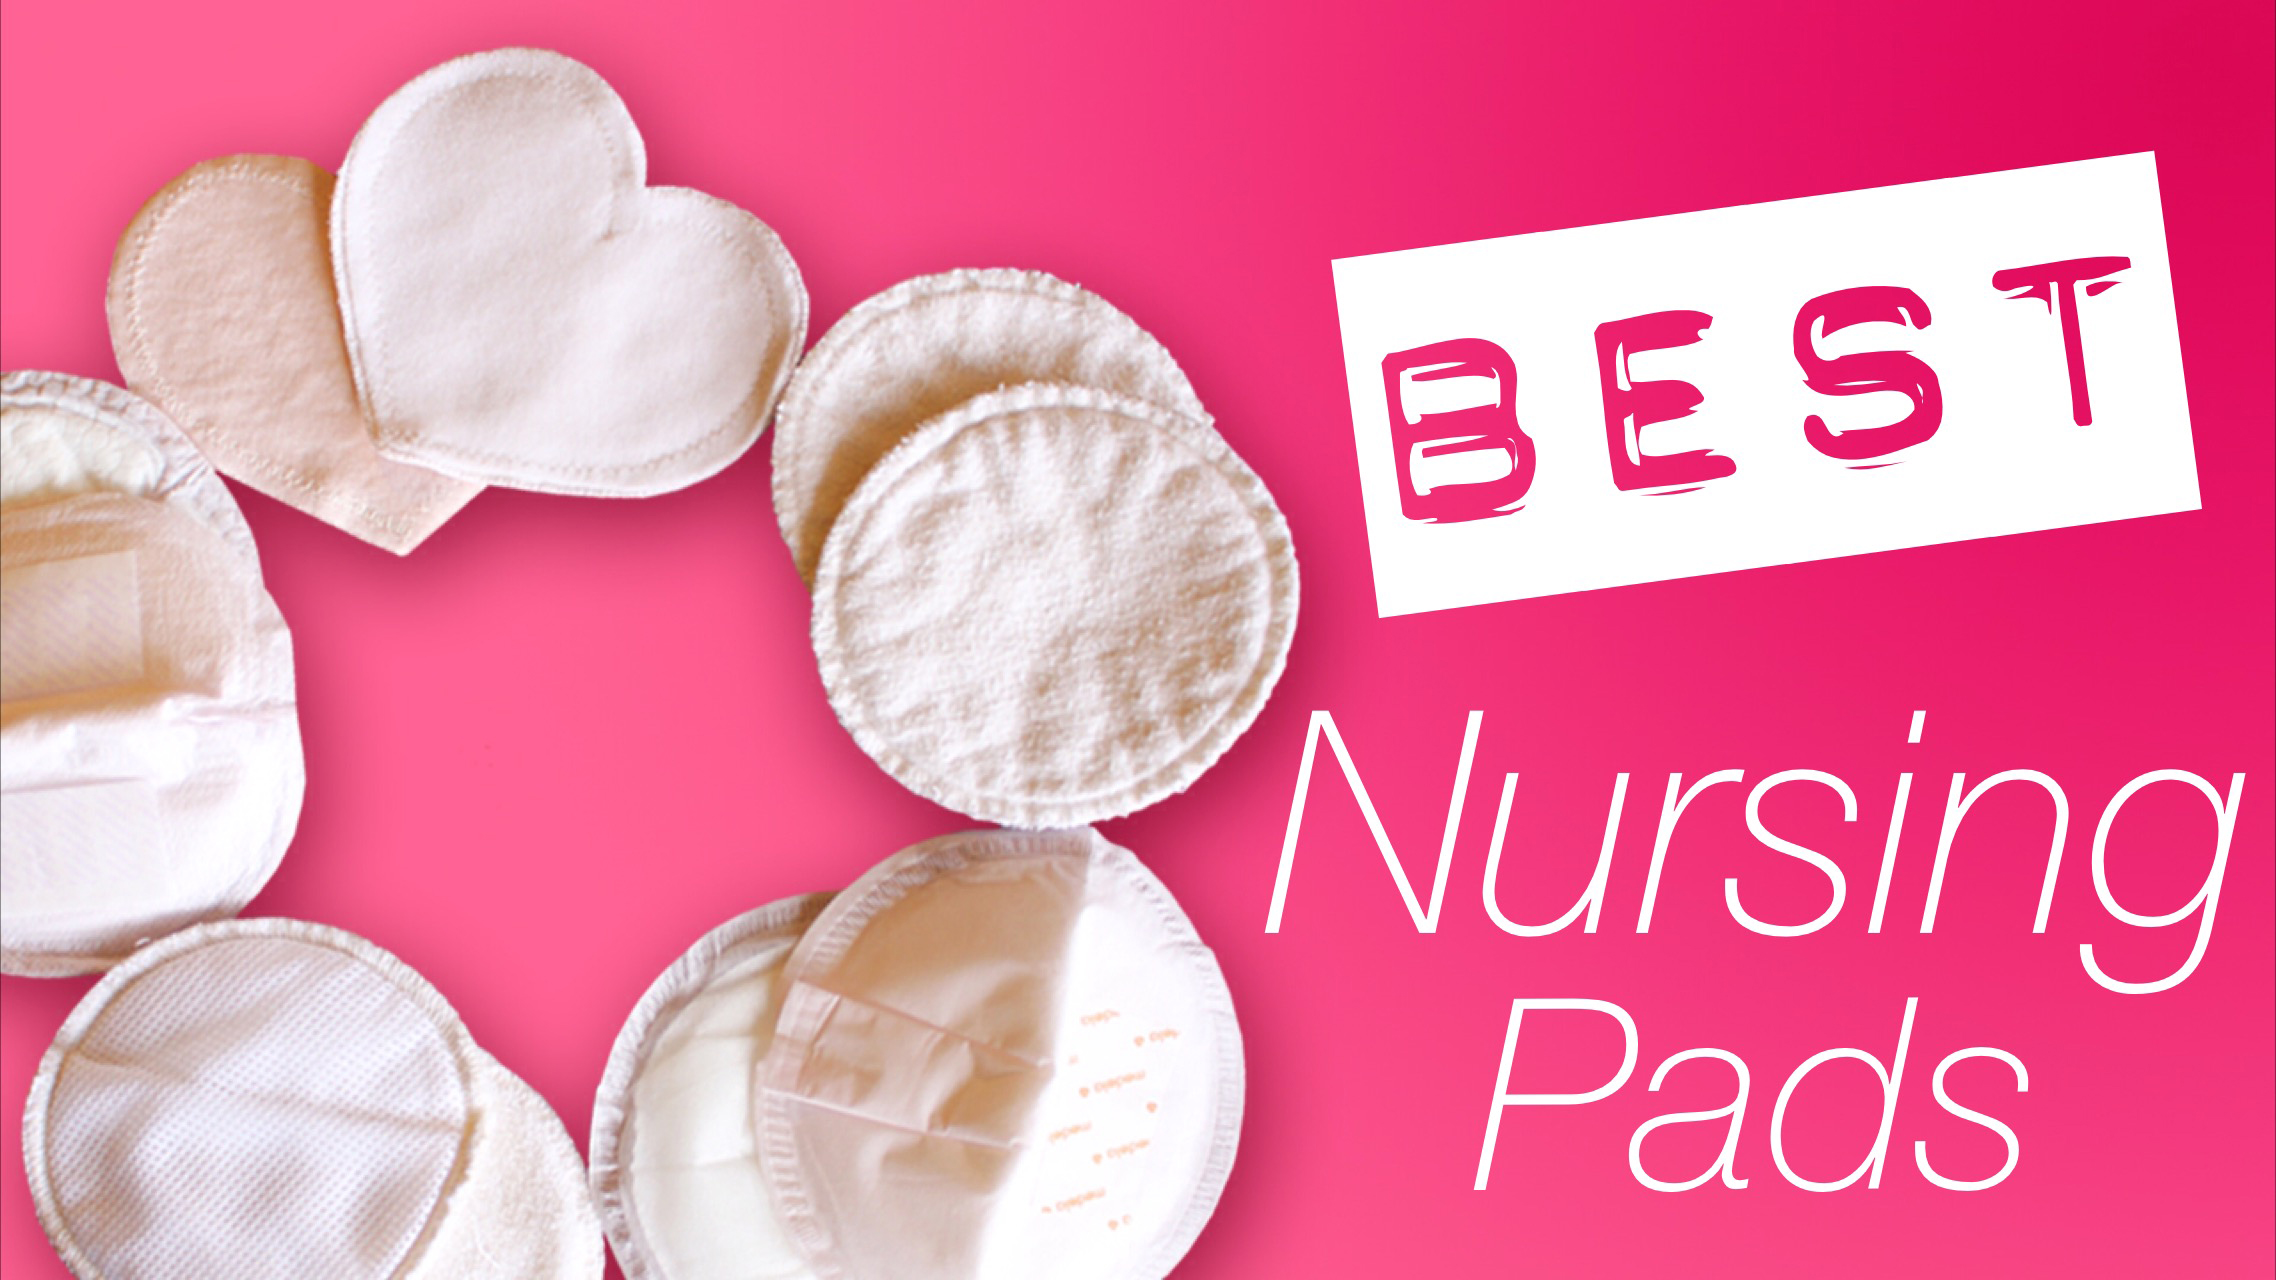 https://mygreennest.com/wp-content/uploads/2015/04/Best-Nursing-Pads-Thumbnail.jpg